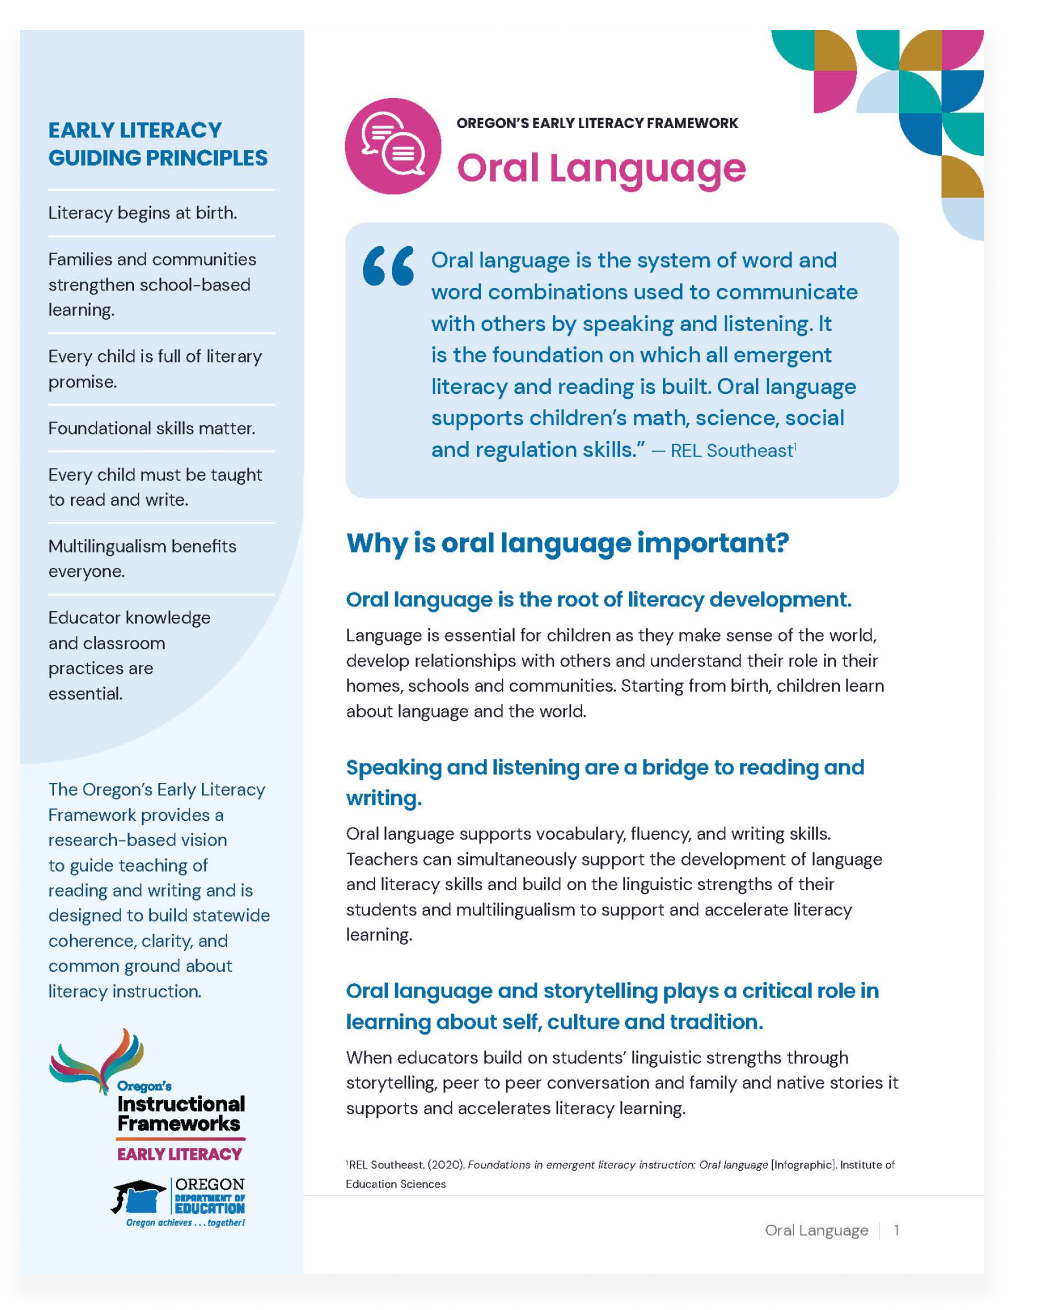 Oregon's Early Literacy Framework: Oral Language